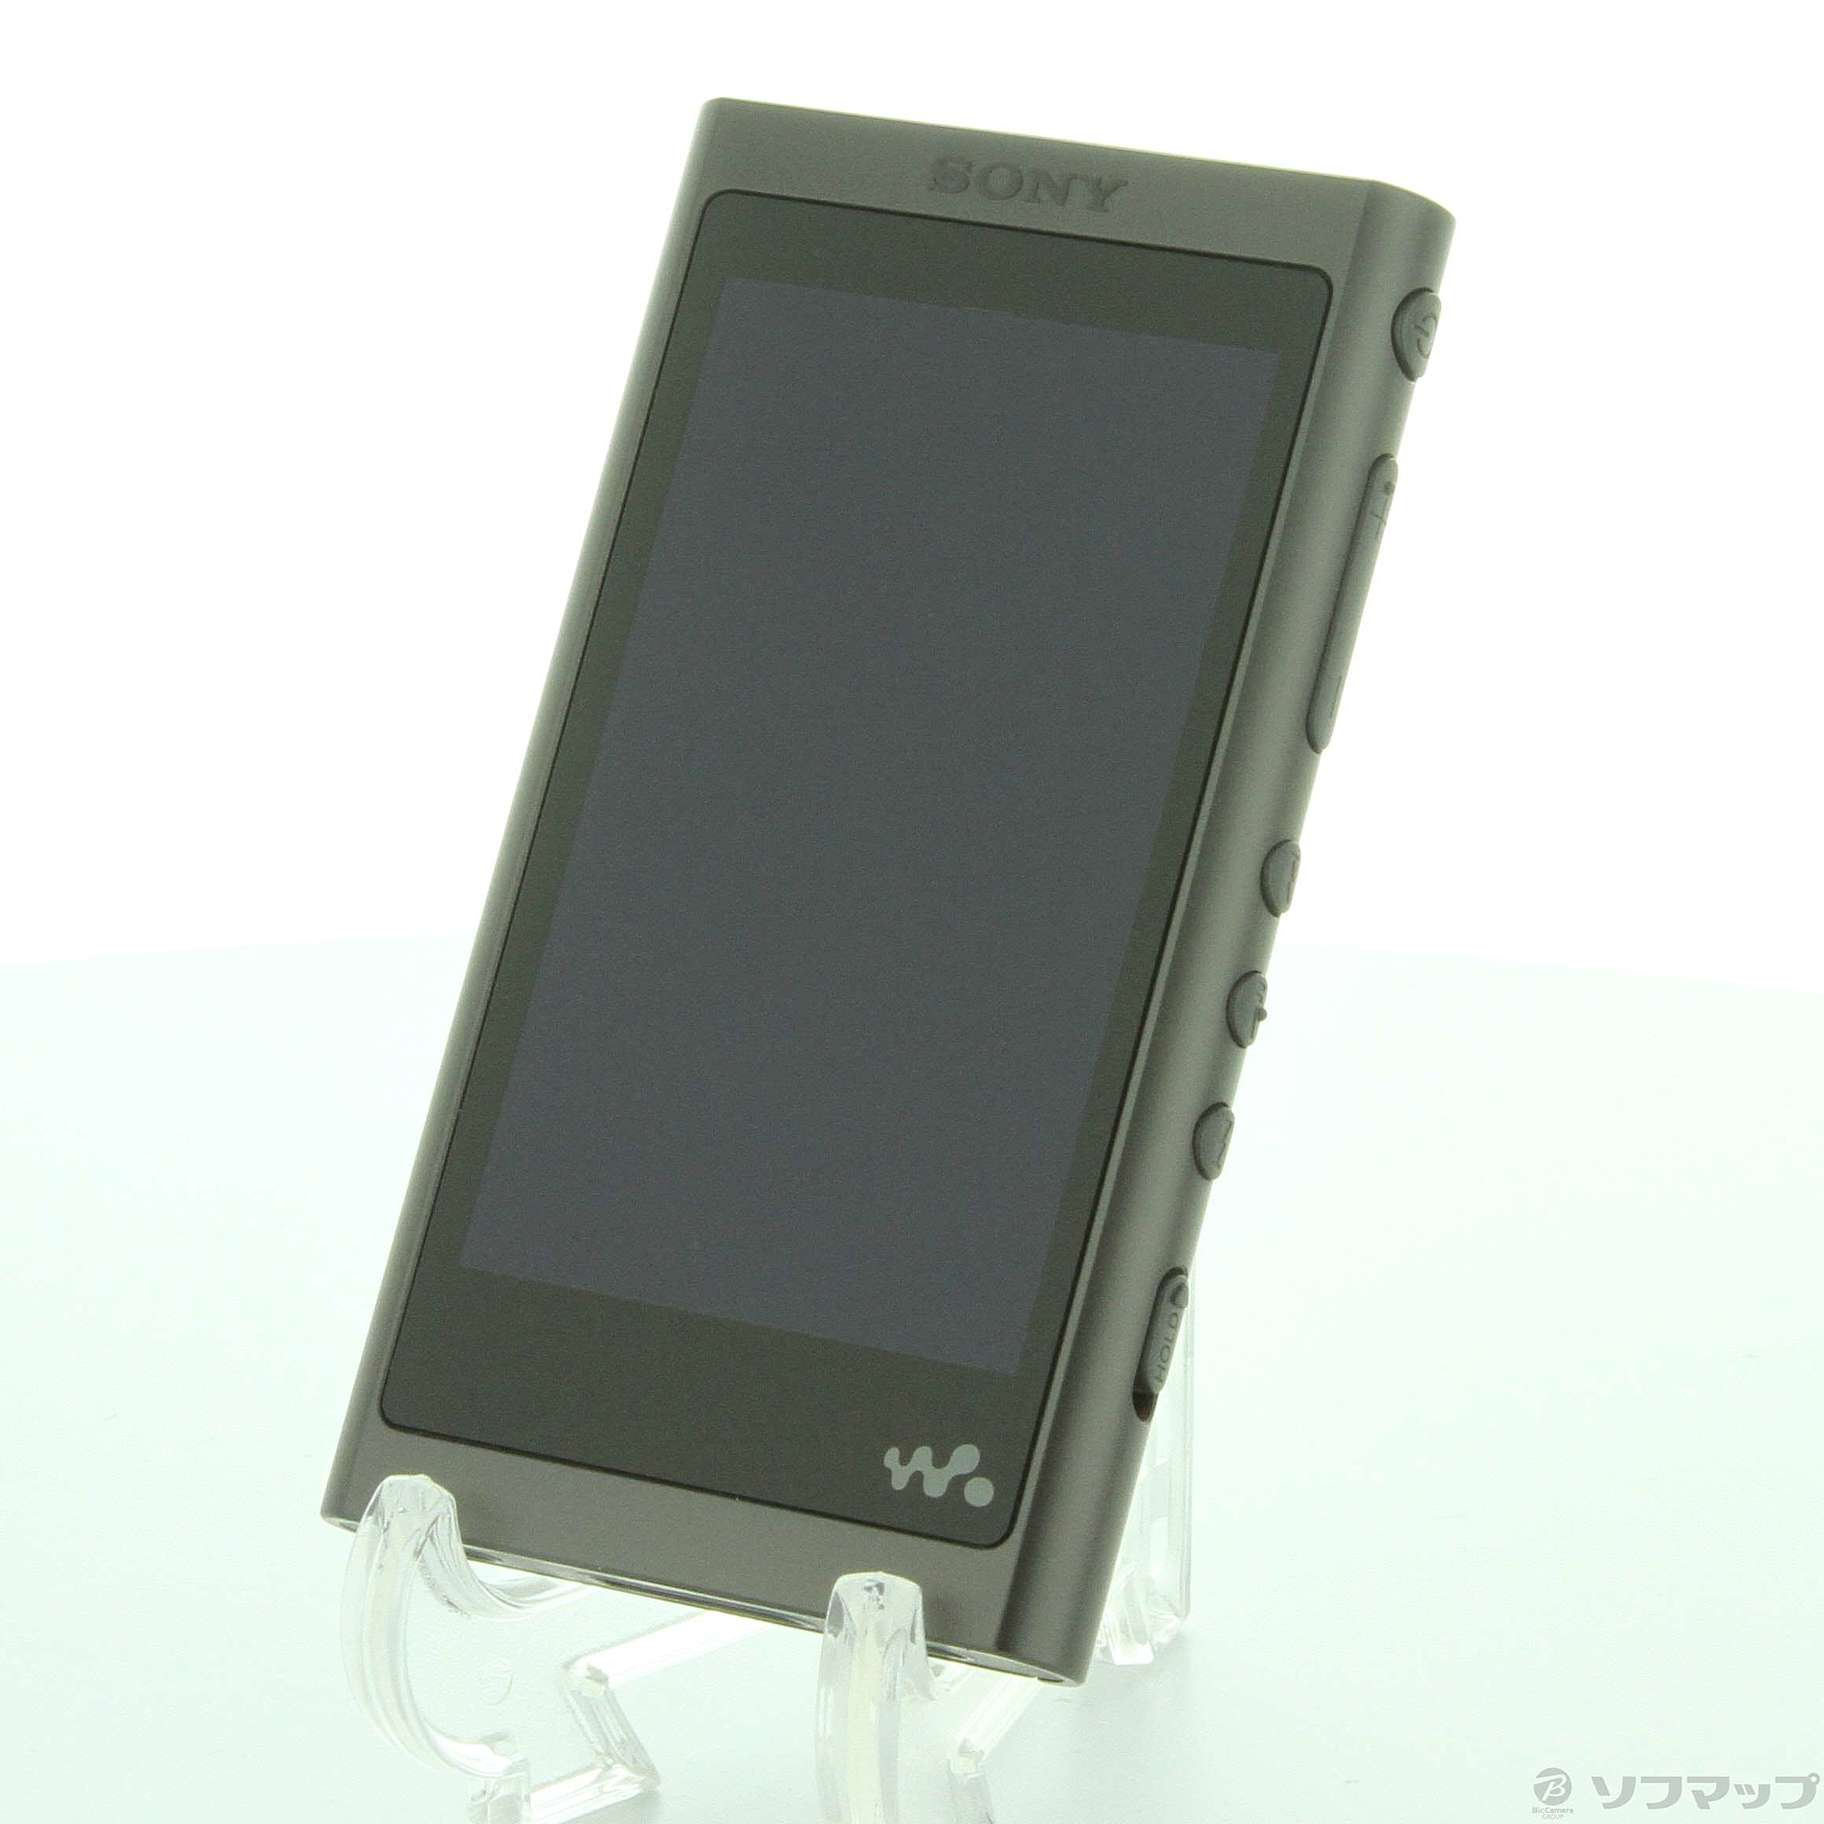 SONY WALKMAN A55 グレイッシュブラック 16GB